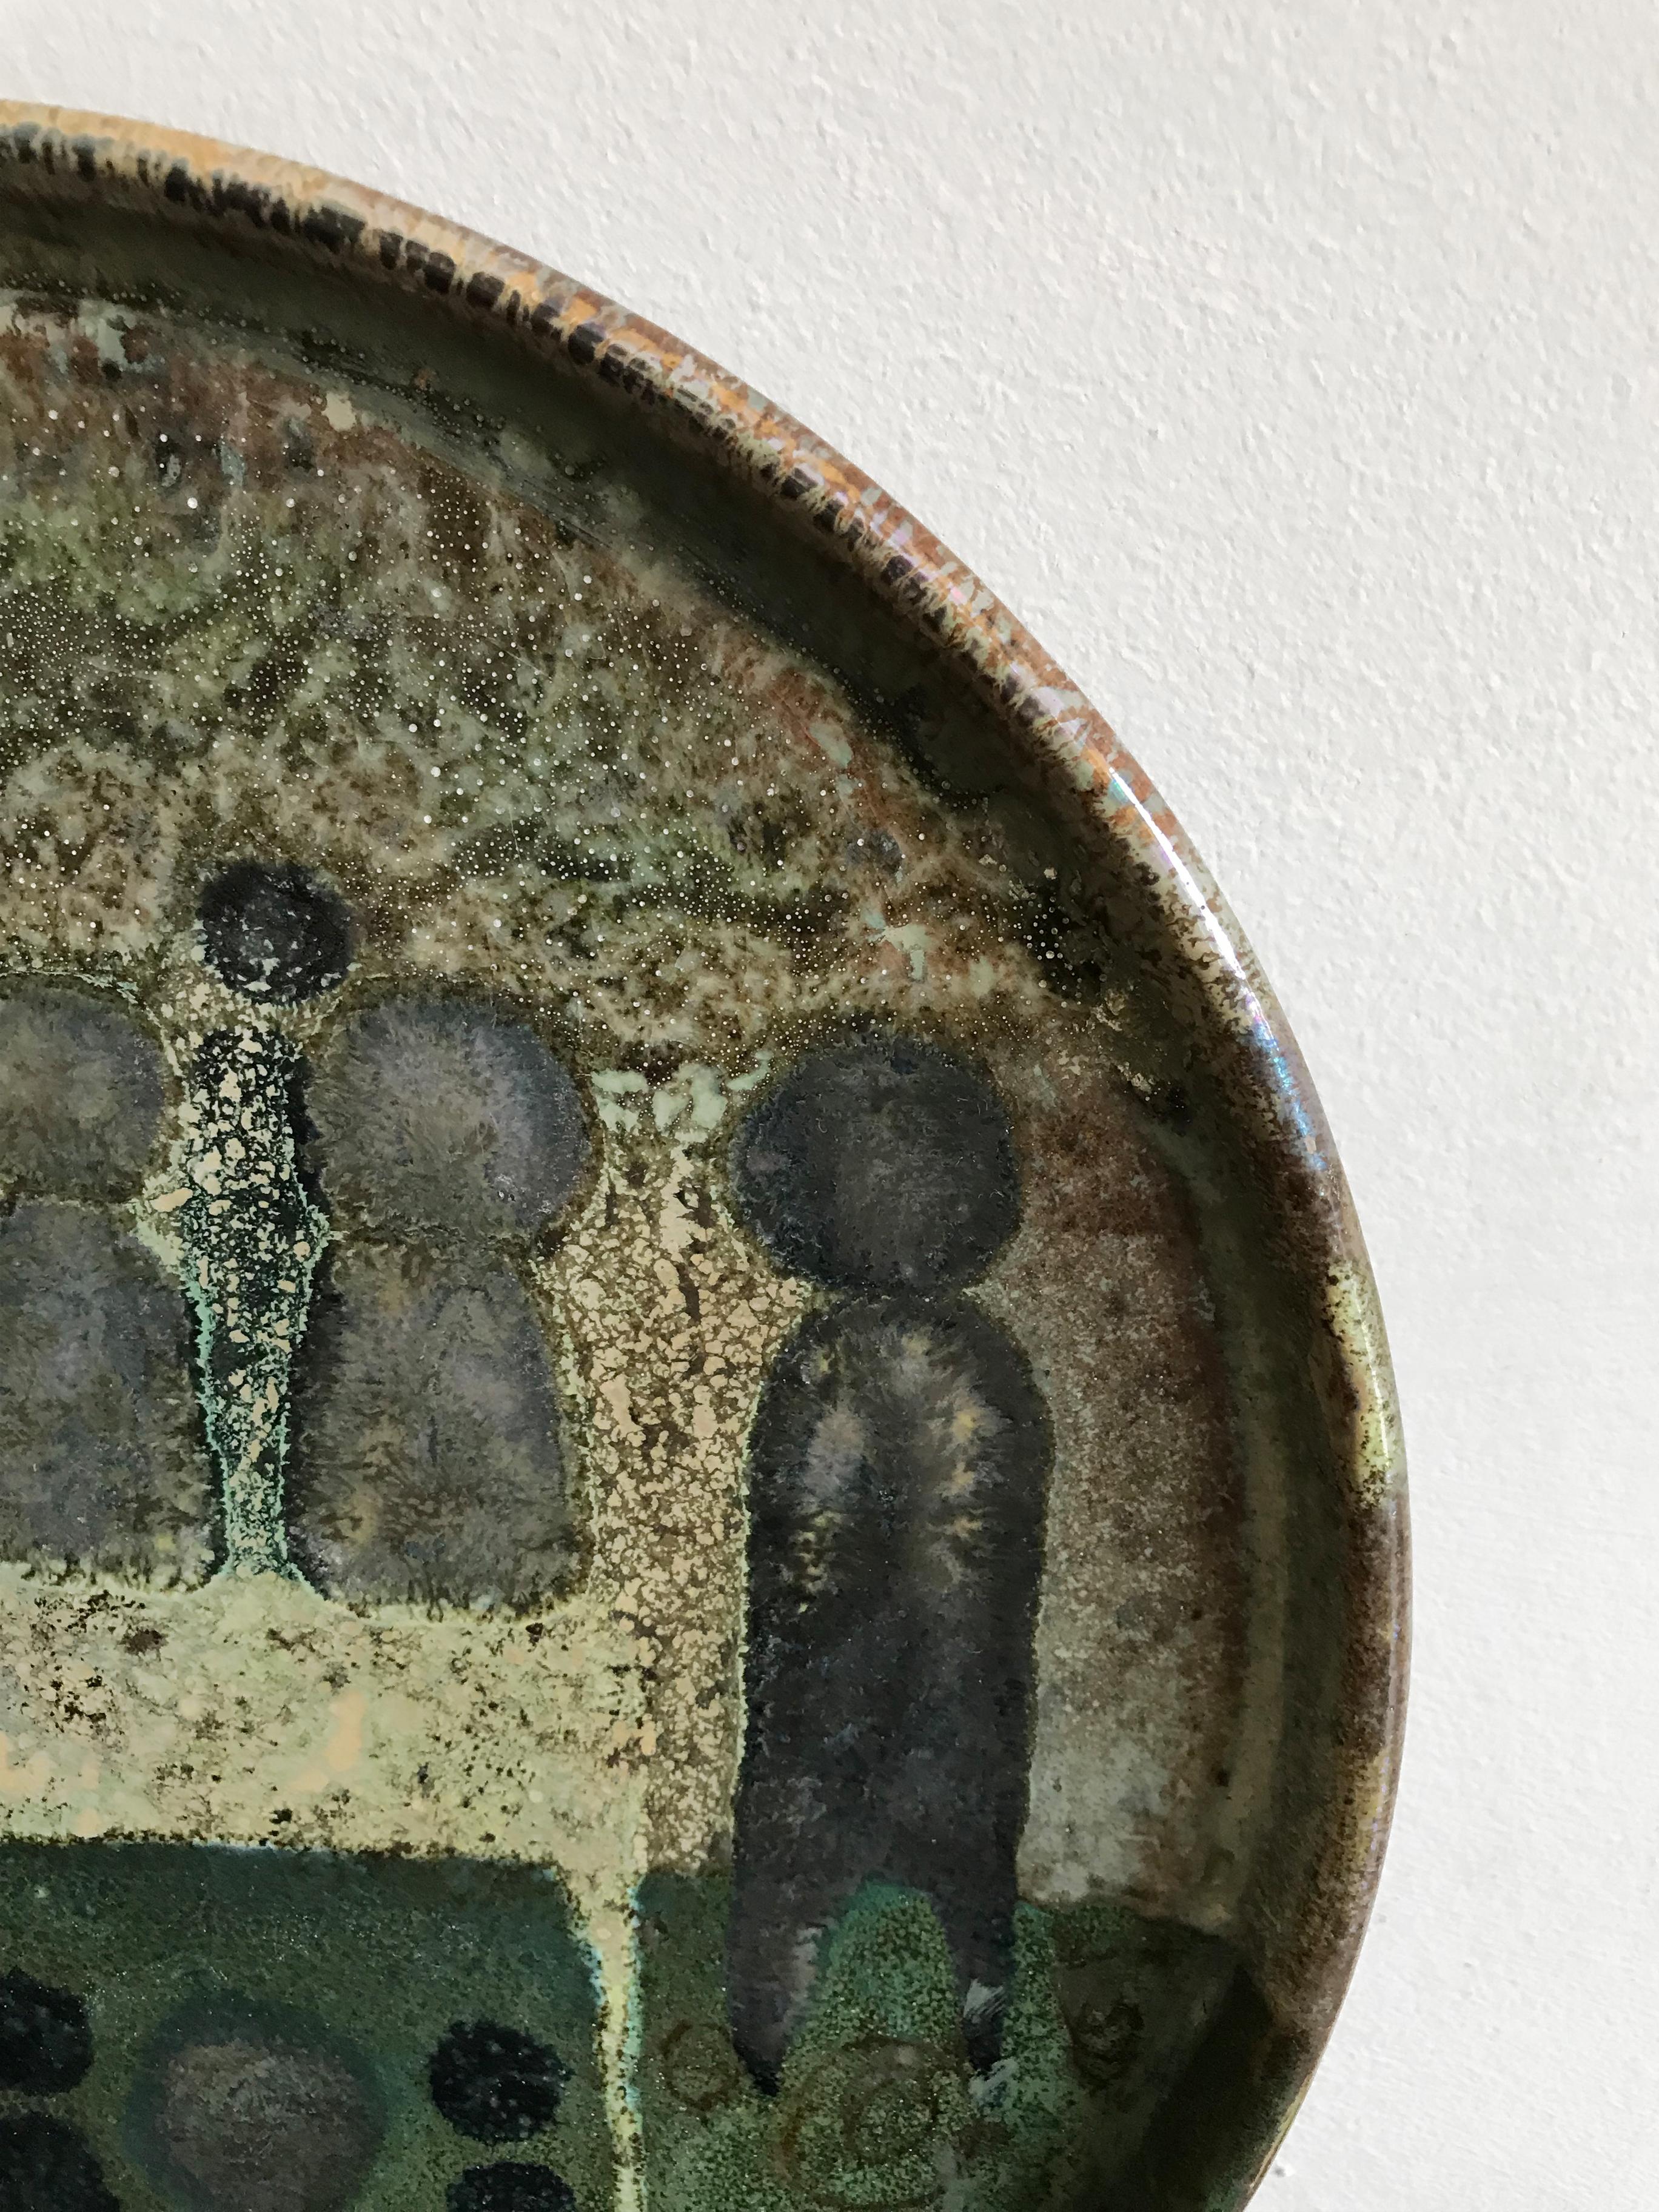 Italian ceramic plate or centerpiece marked Vanna Faenza on the bottom, circa 1960s.